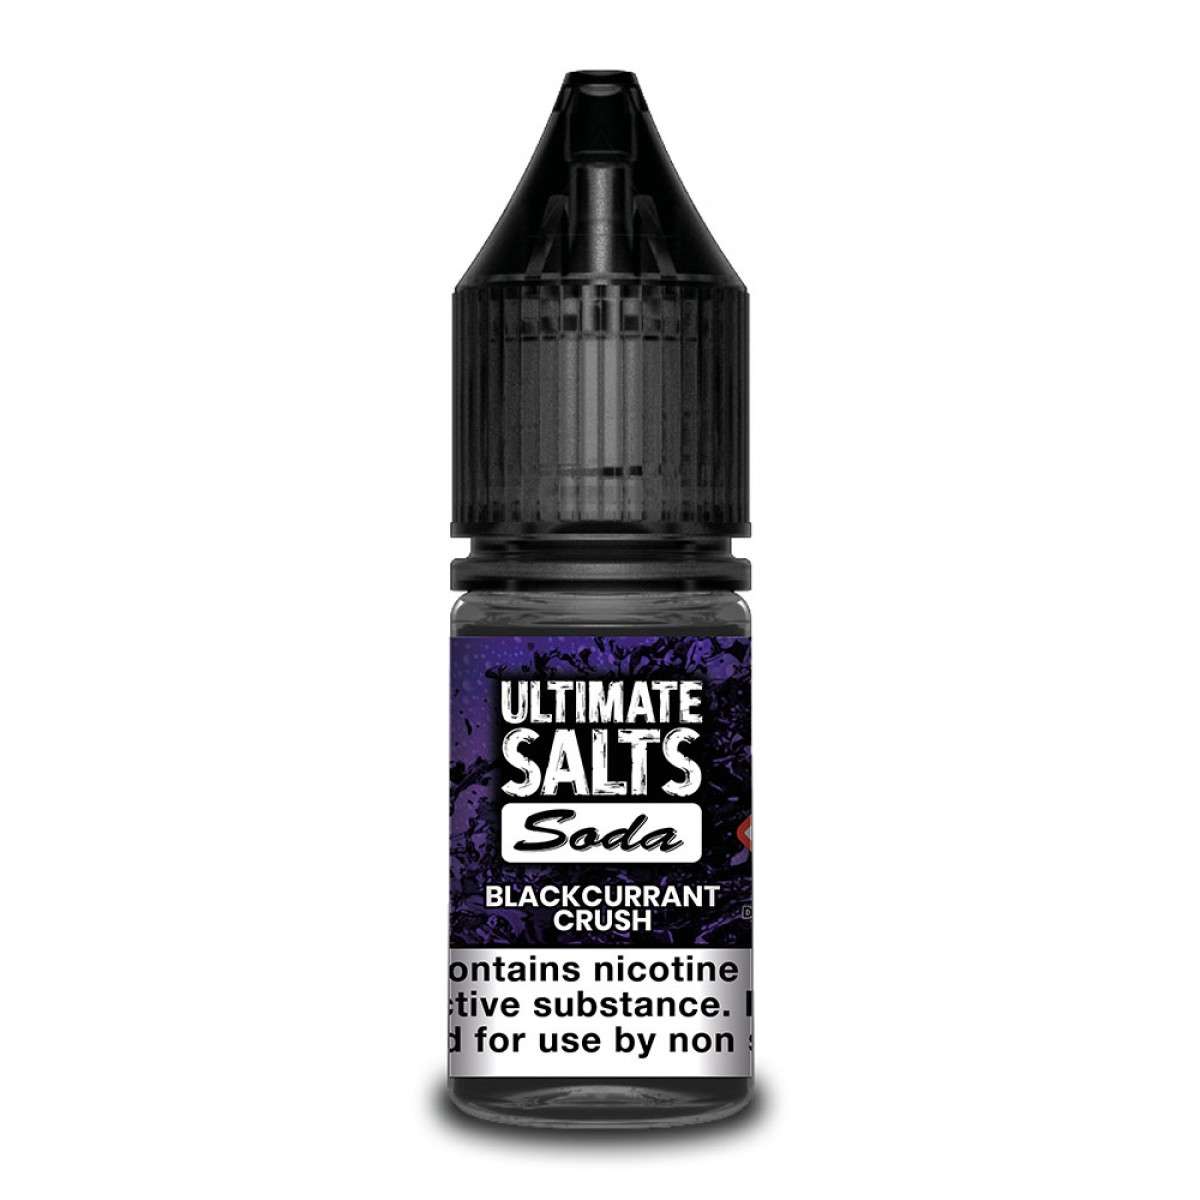  Blackcurrant Crush Soda Nic Salt E-Liquid by Ultimate Salts 10ml 